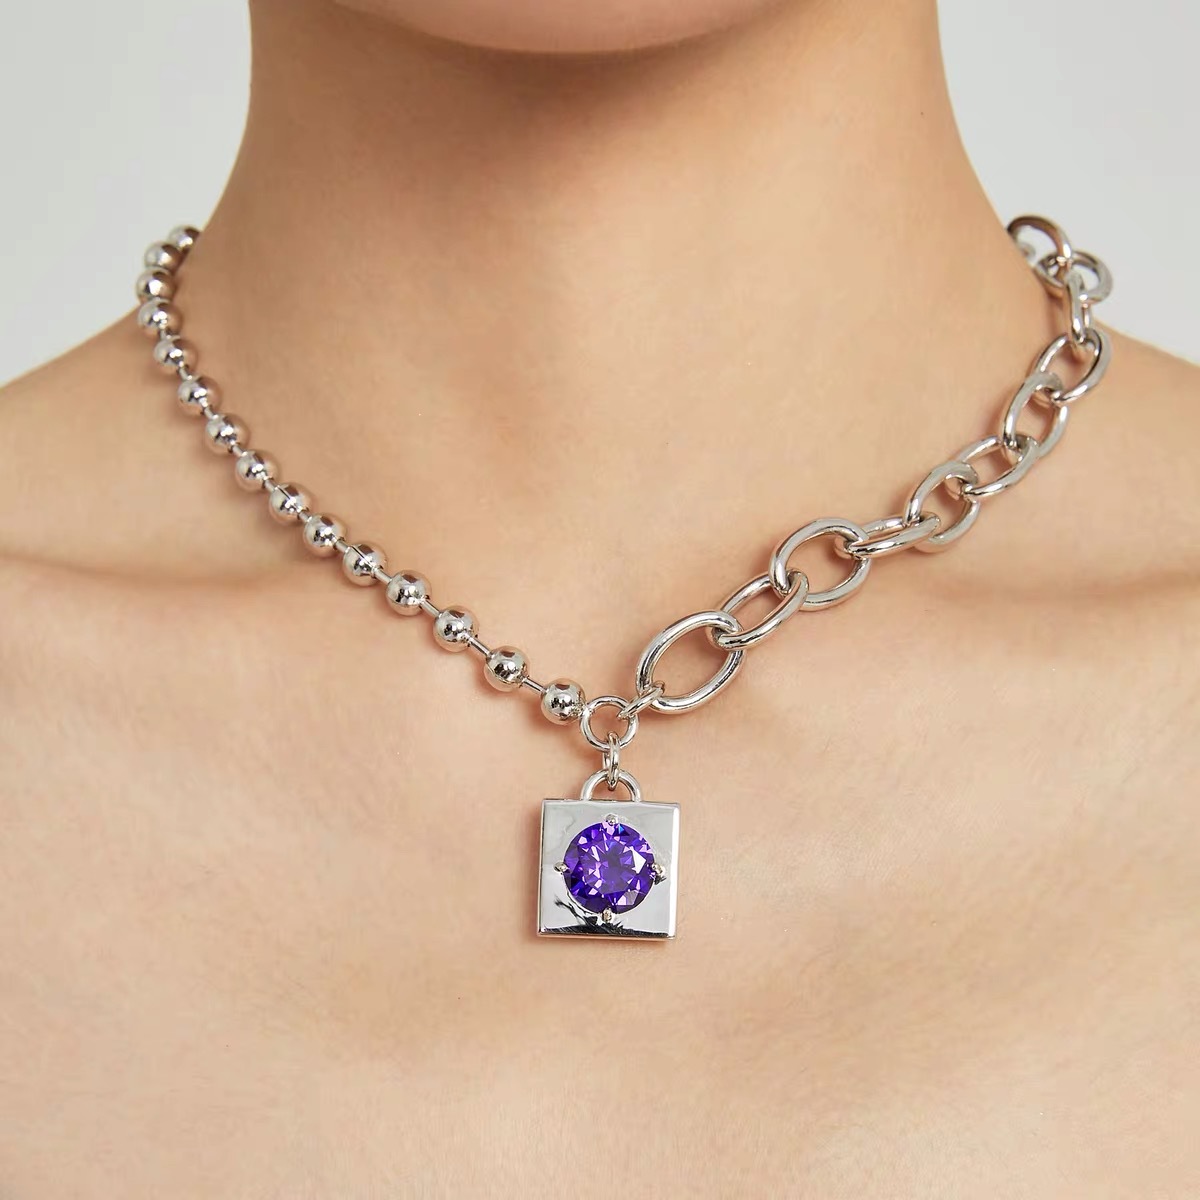 Bling Runway Mirror in mirror purple gemstone inlaid pendant asymmetric stitching necklace-BilngRunway